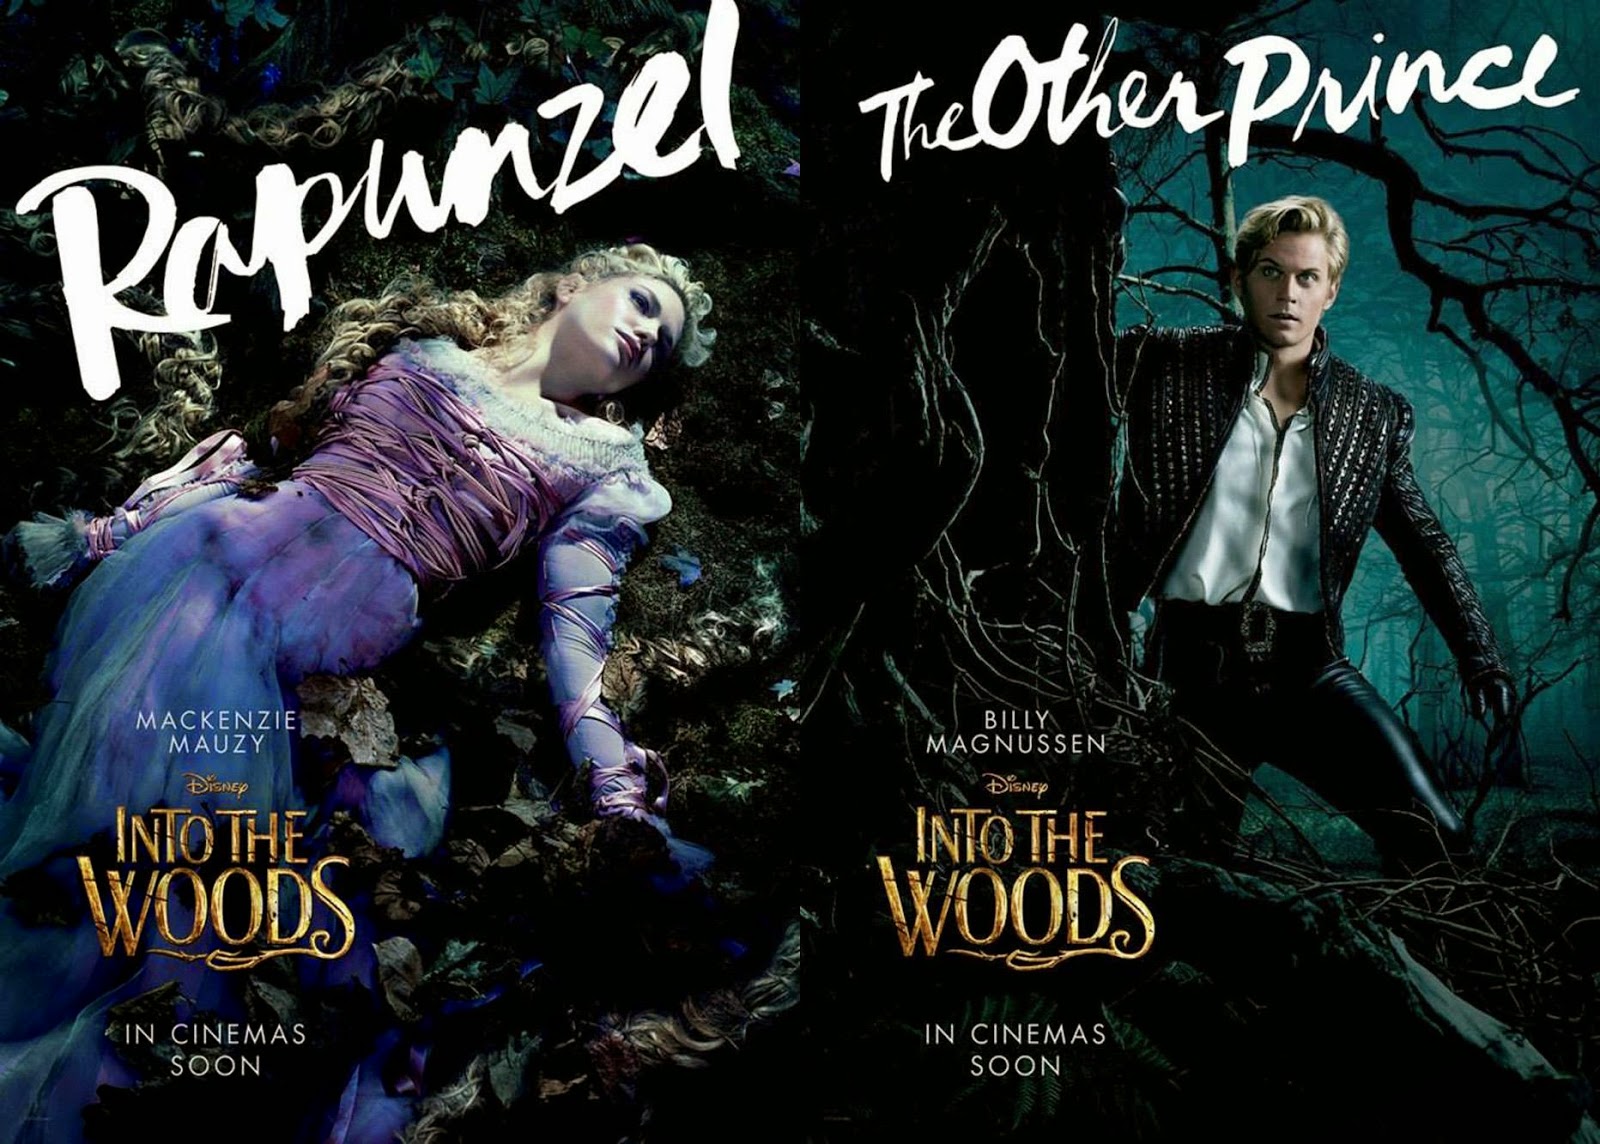 rapunzel+prince+into+woods+poster.jpg